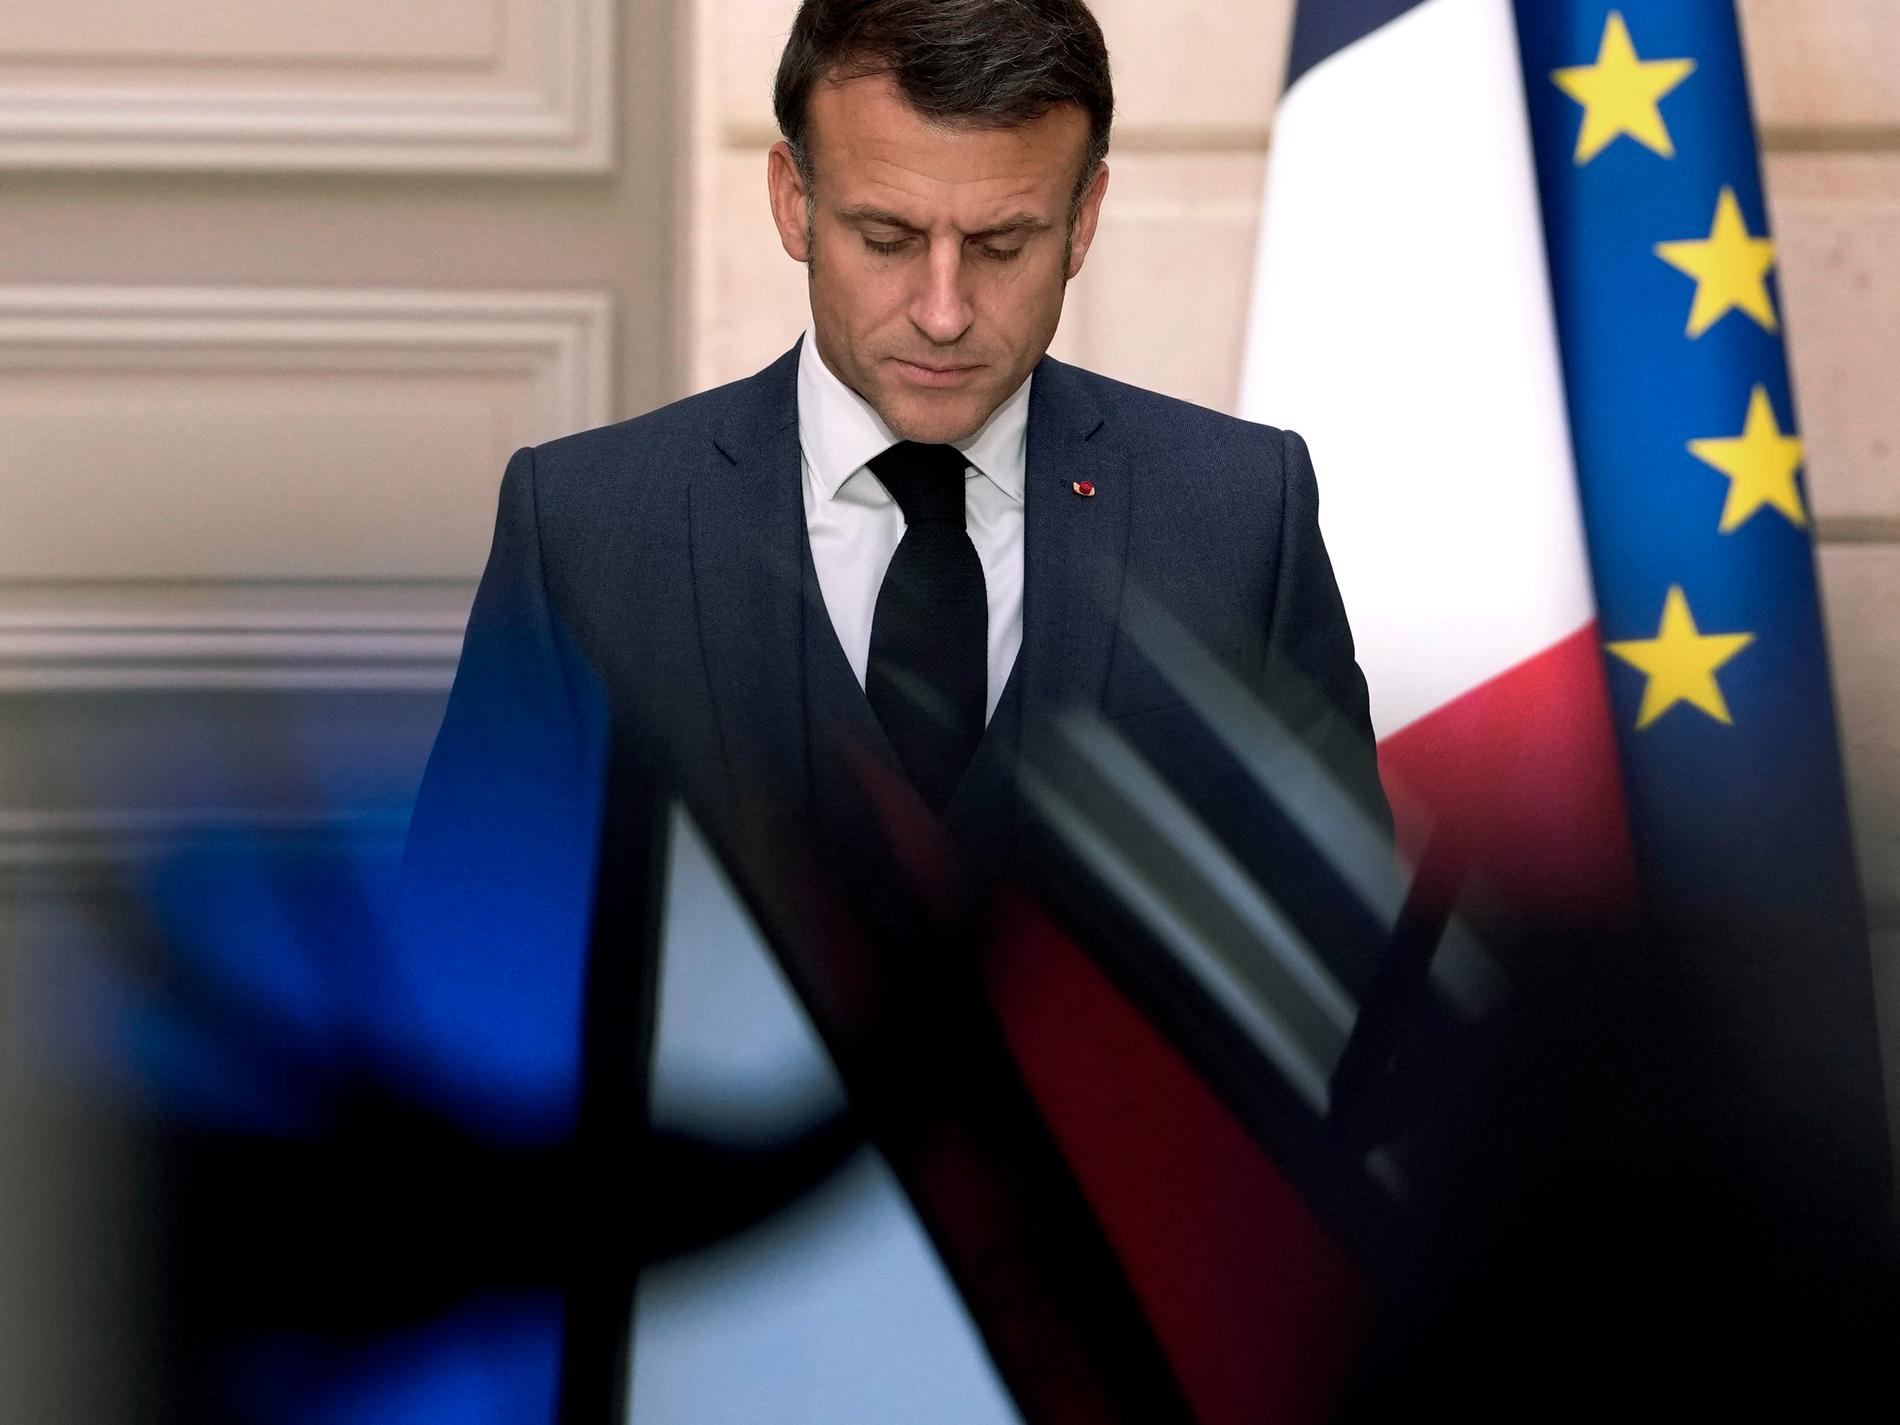 Macron varnar: Nationalister som bankrånare i EU